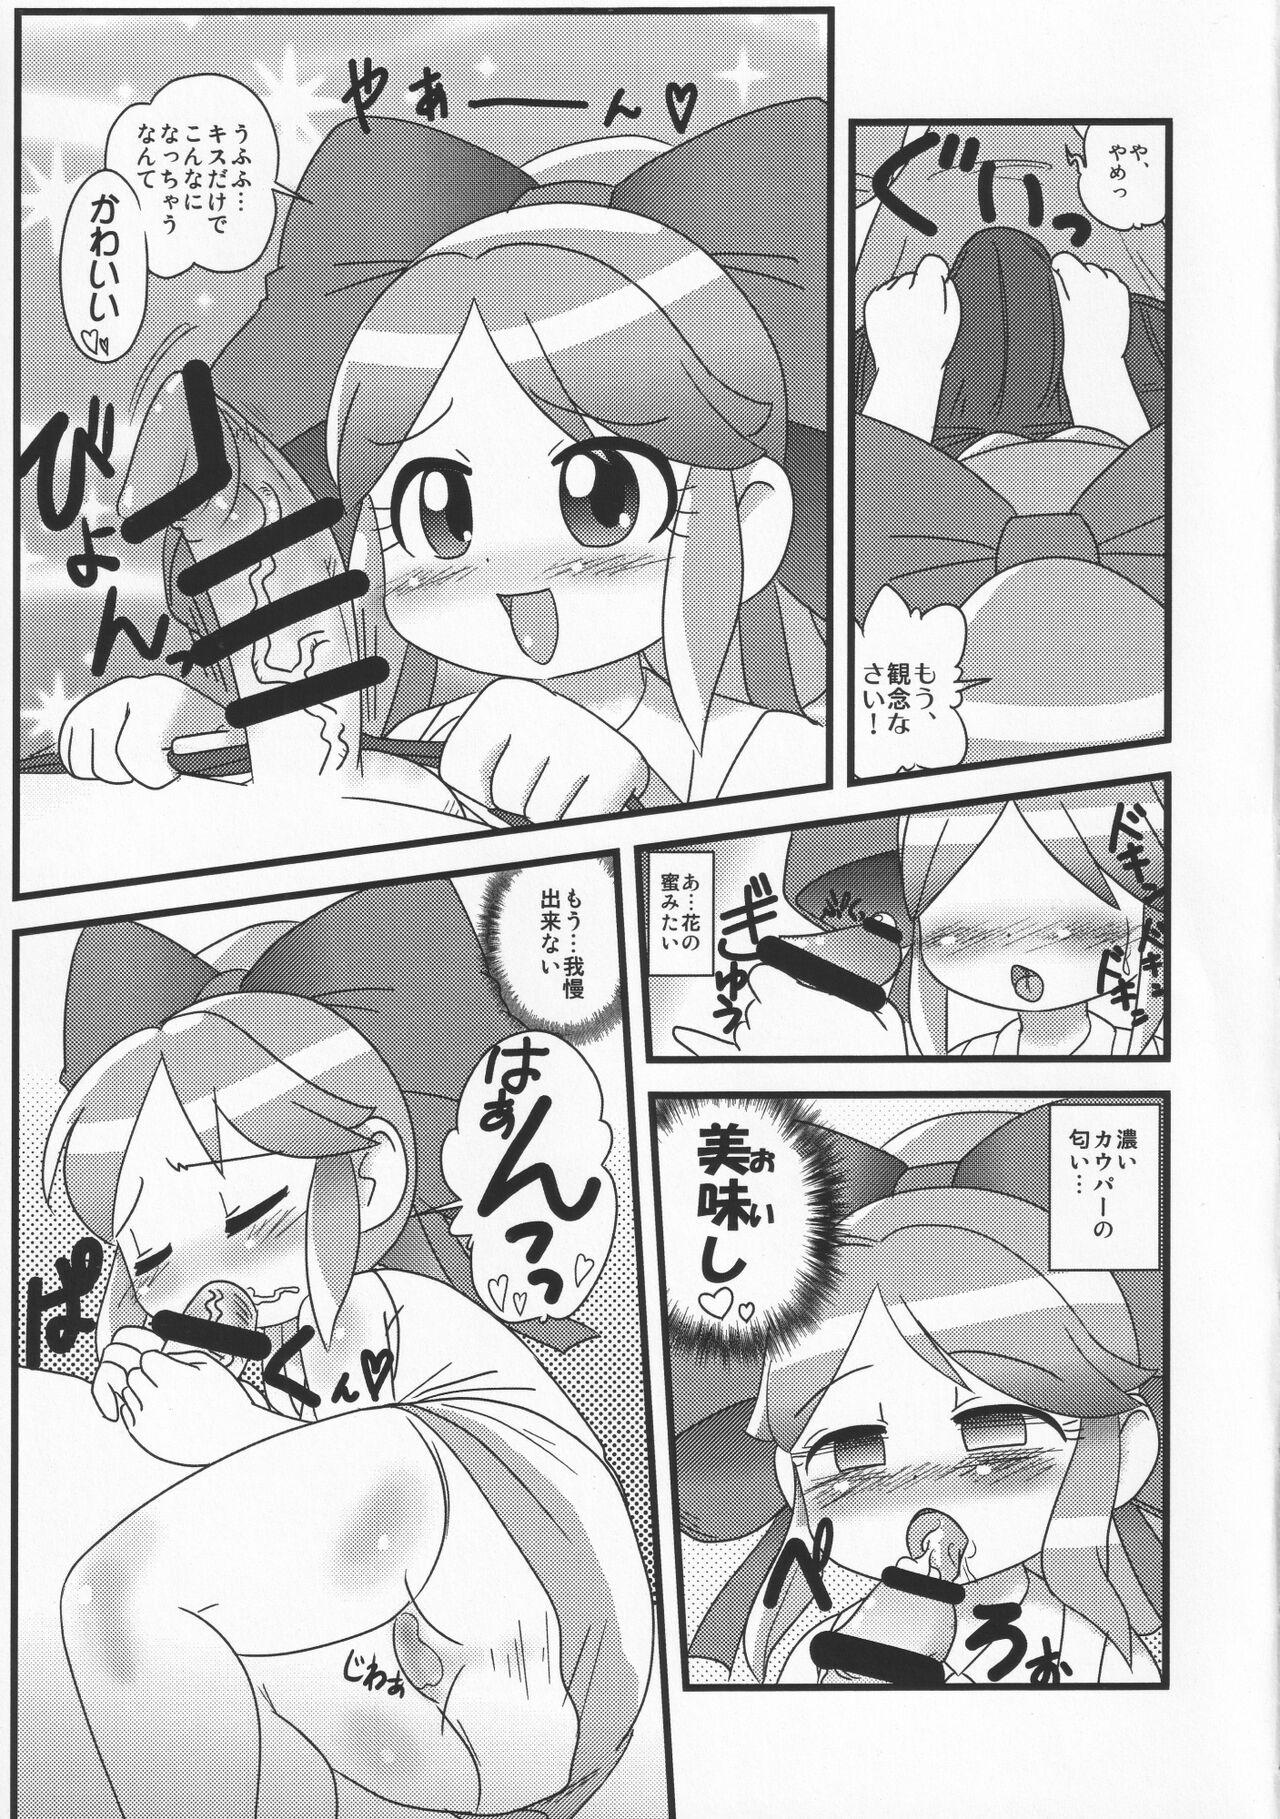 Spread Taose!! Kimari-chan - Battle spirits Exgf - Page 4